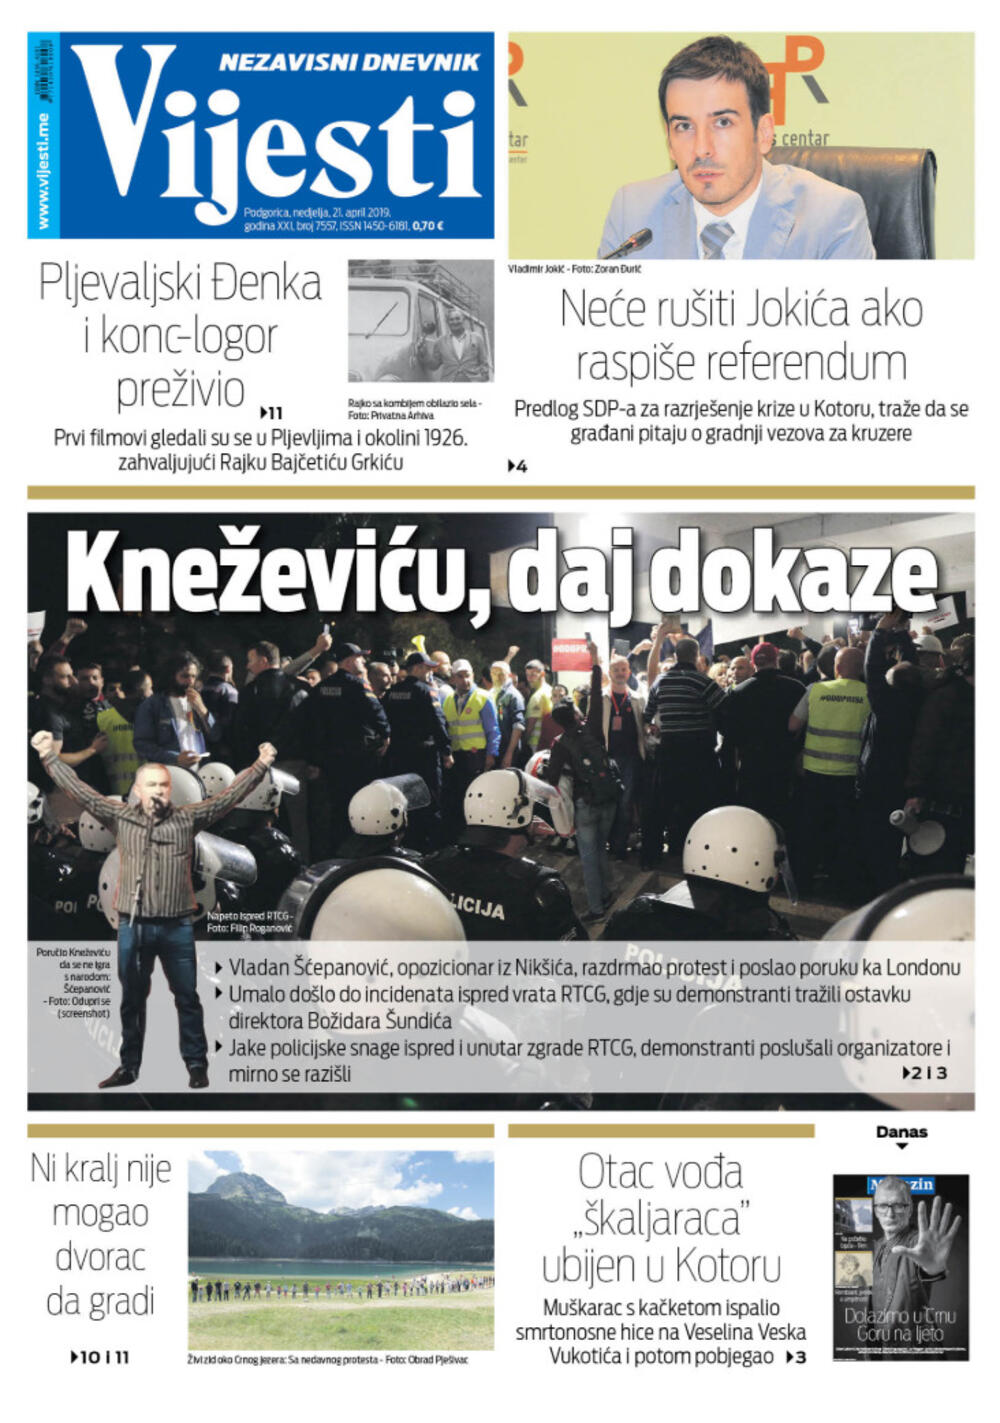 Naslovna strana "Vijesti" za 21. april